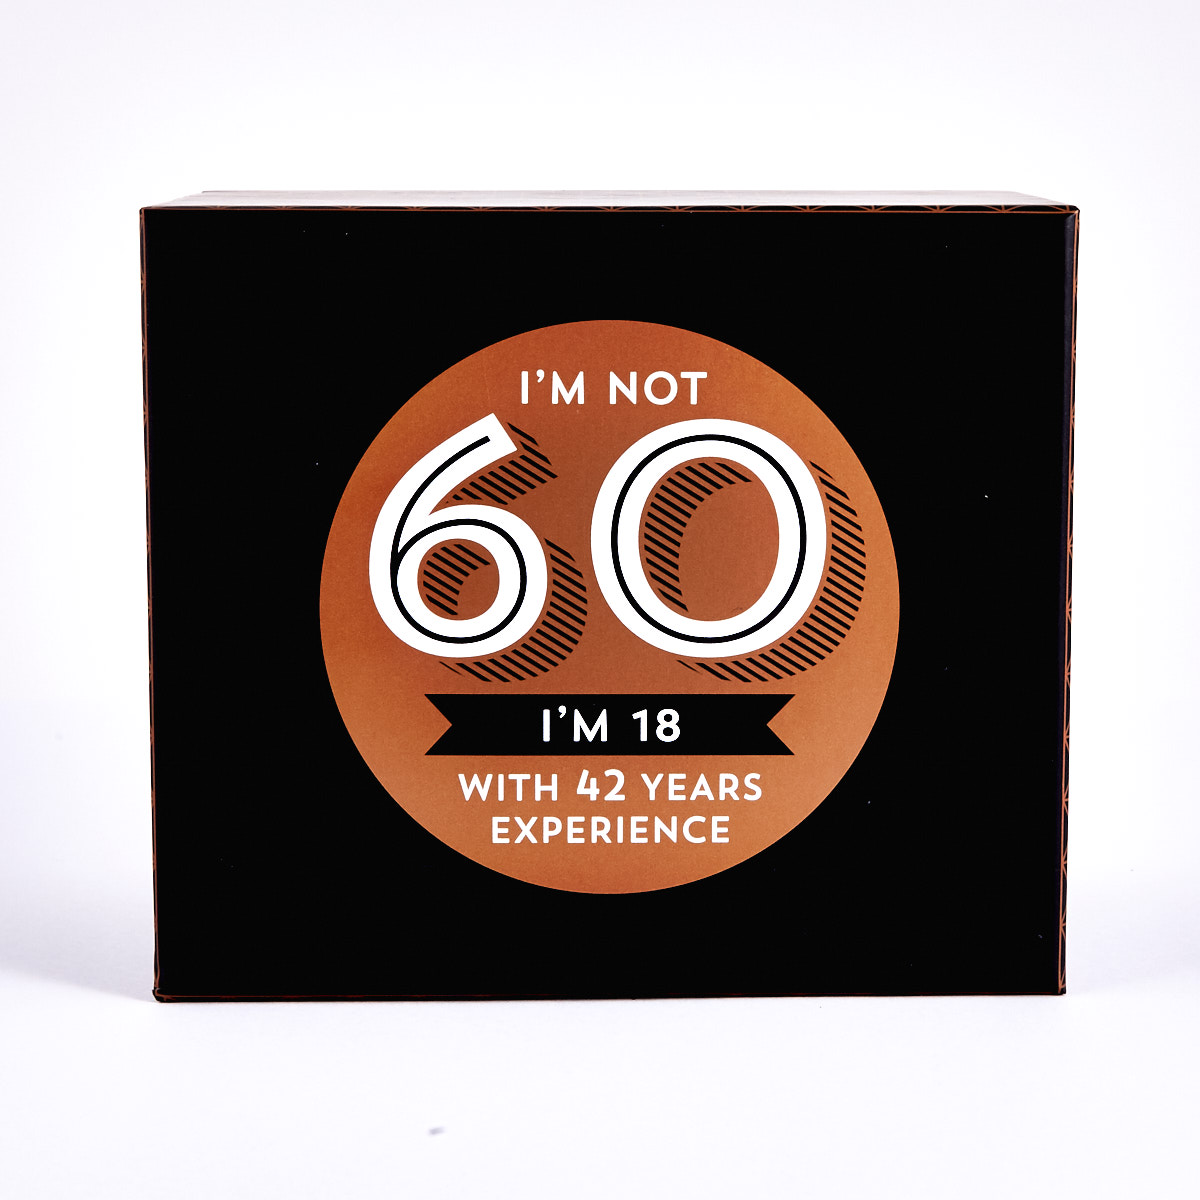 60th Birthday Mug - 18 With 42 Years Experience